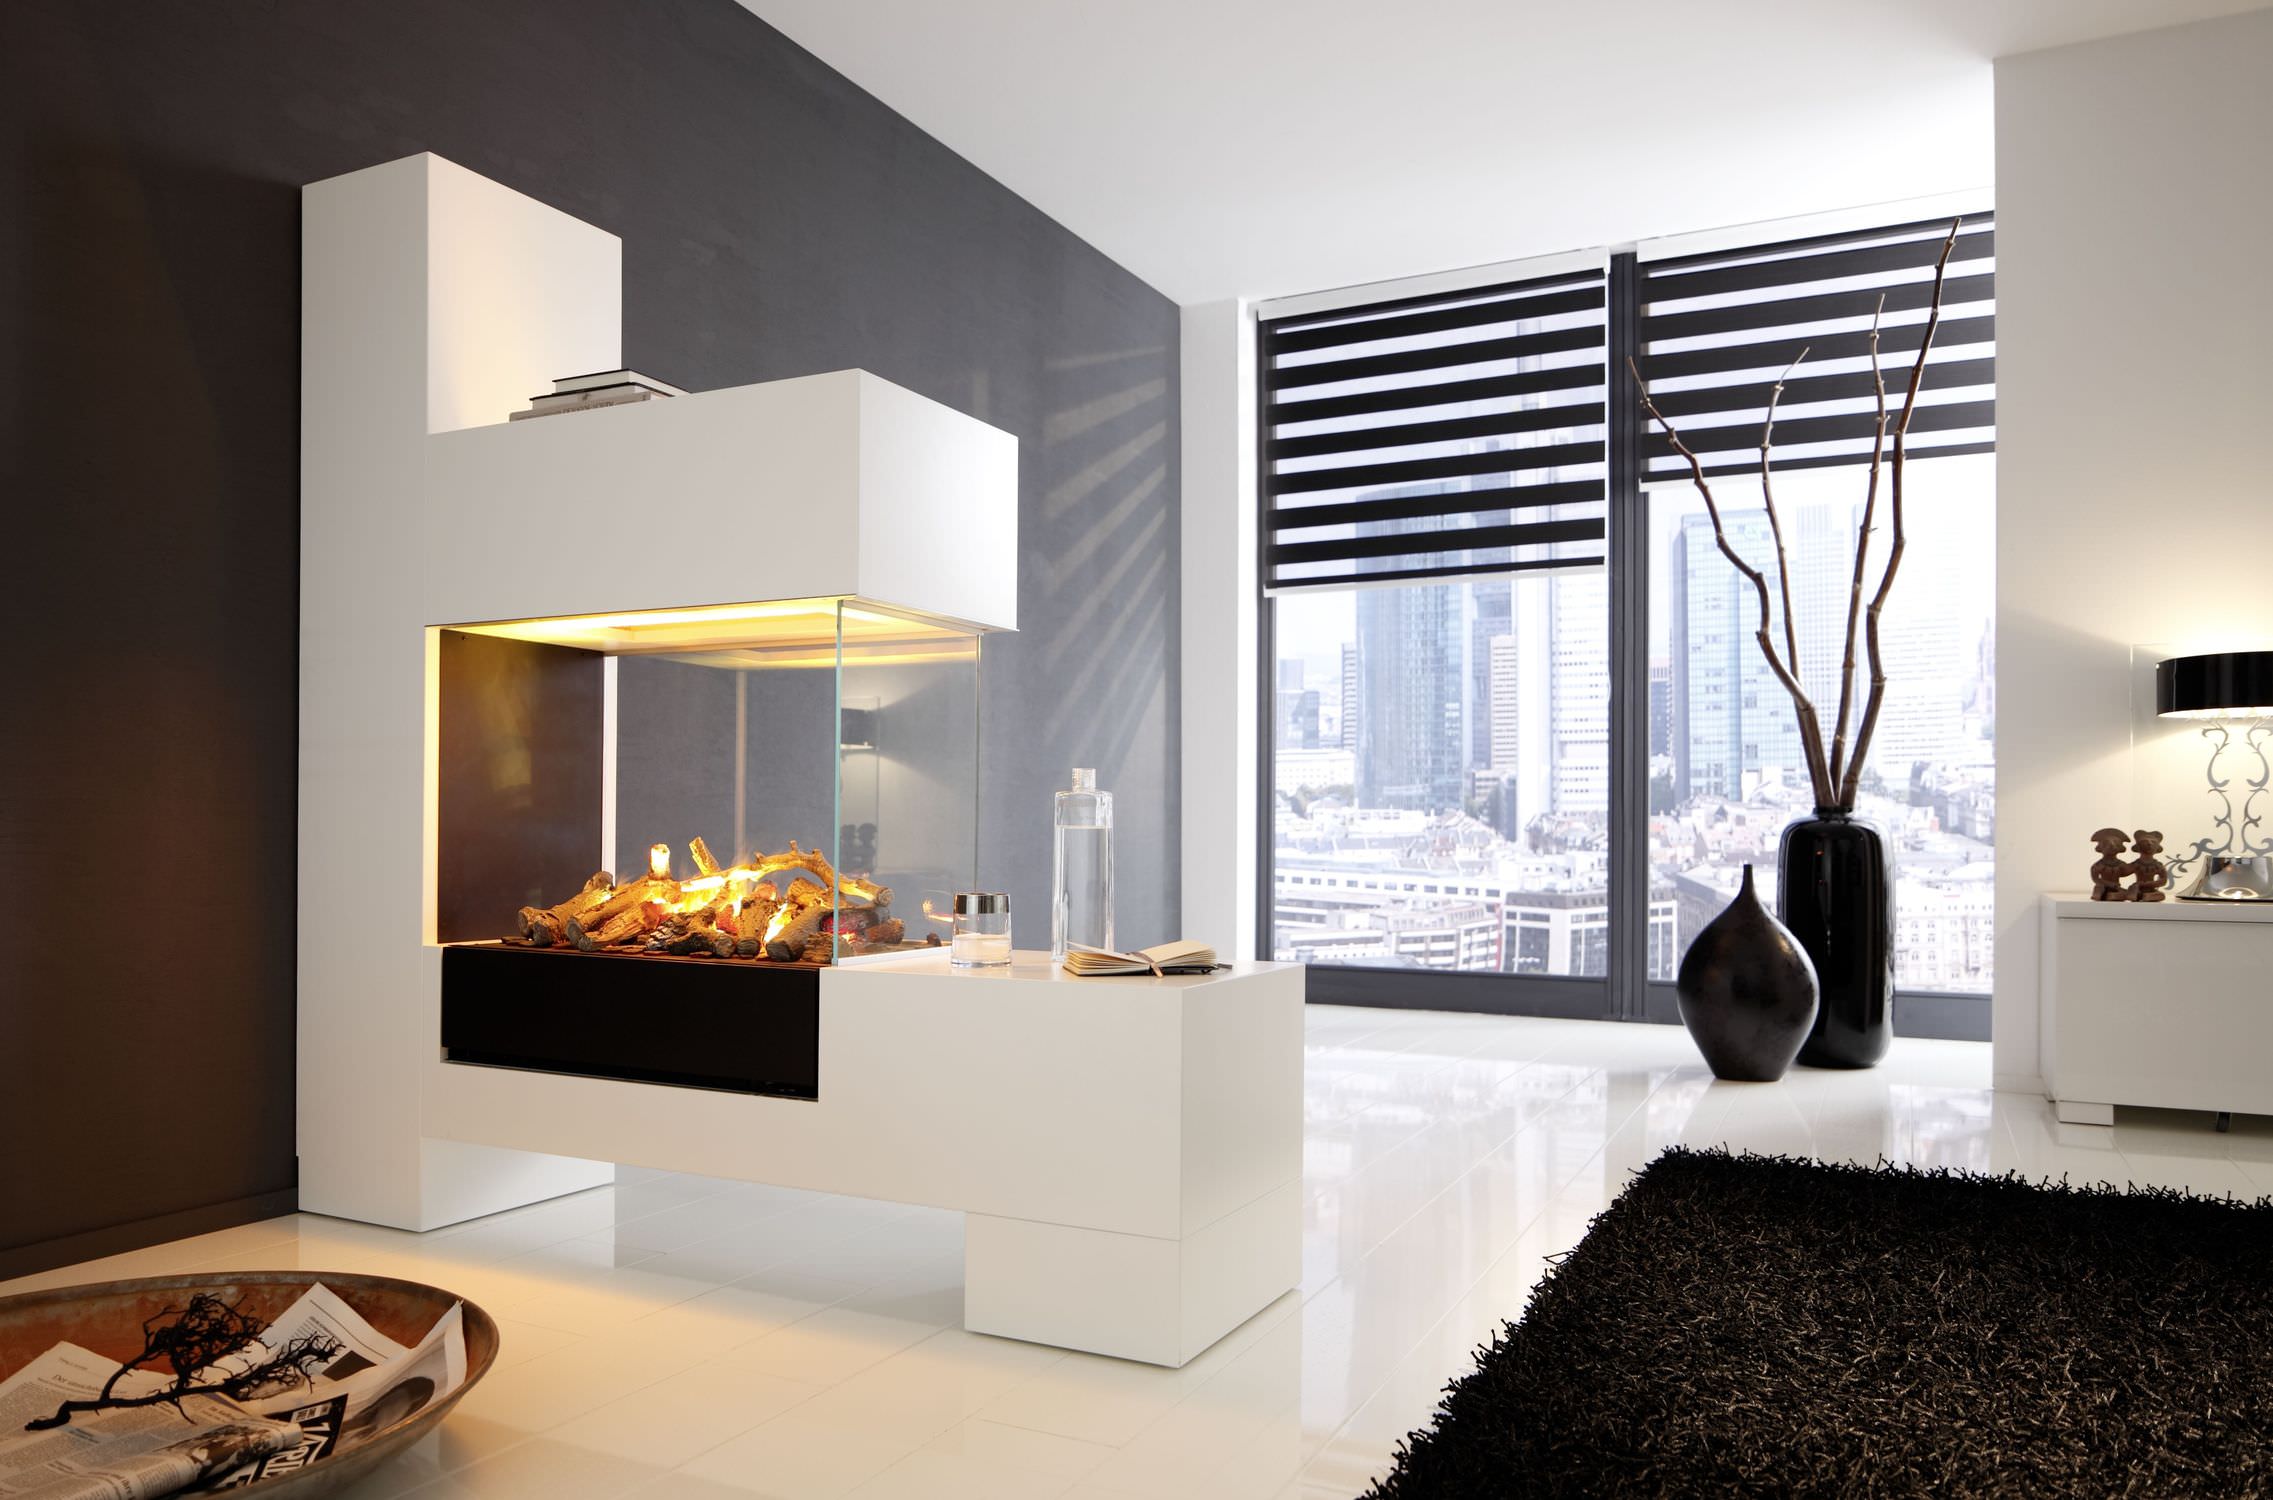 12 clean and simple fireplace idea best fireplace idea homebnc.jpg